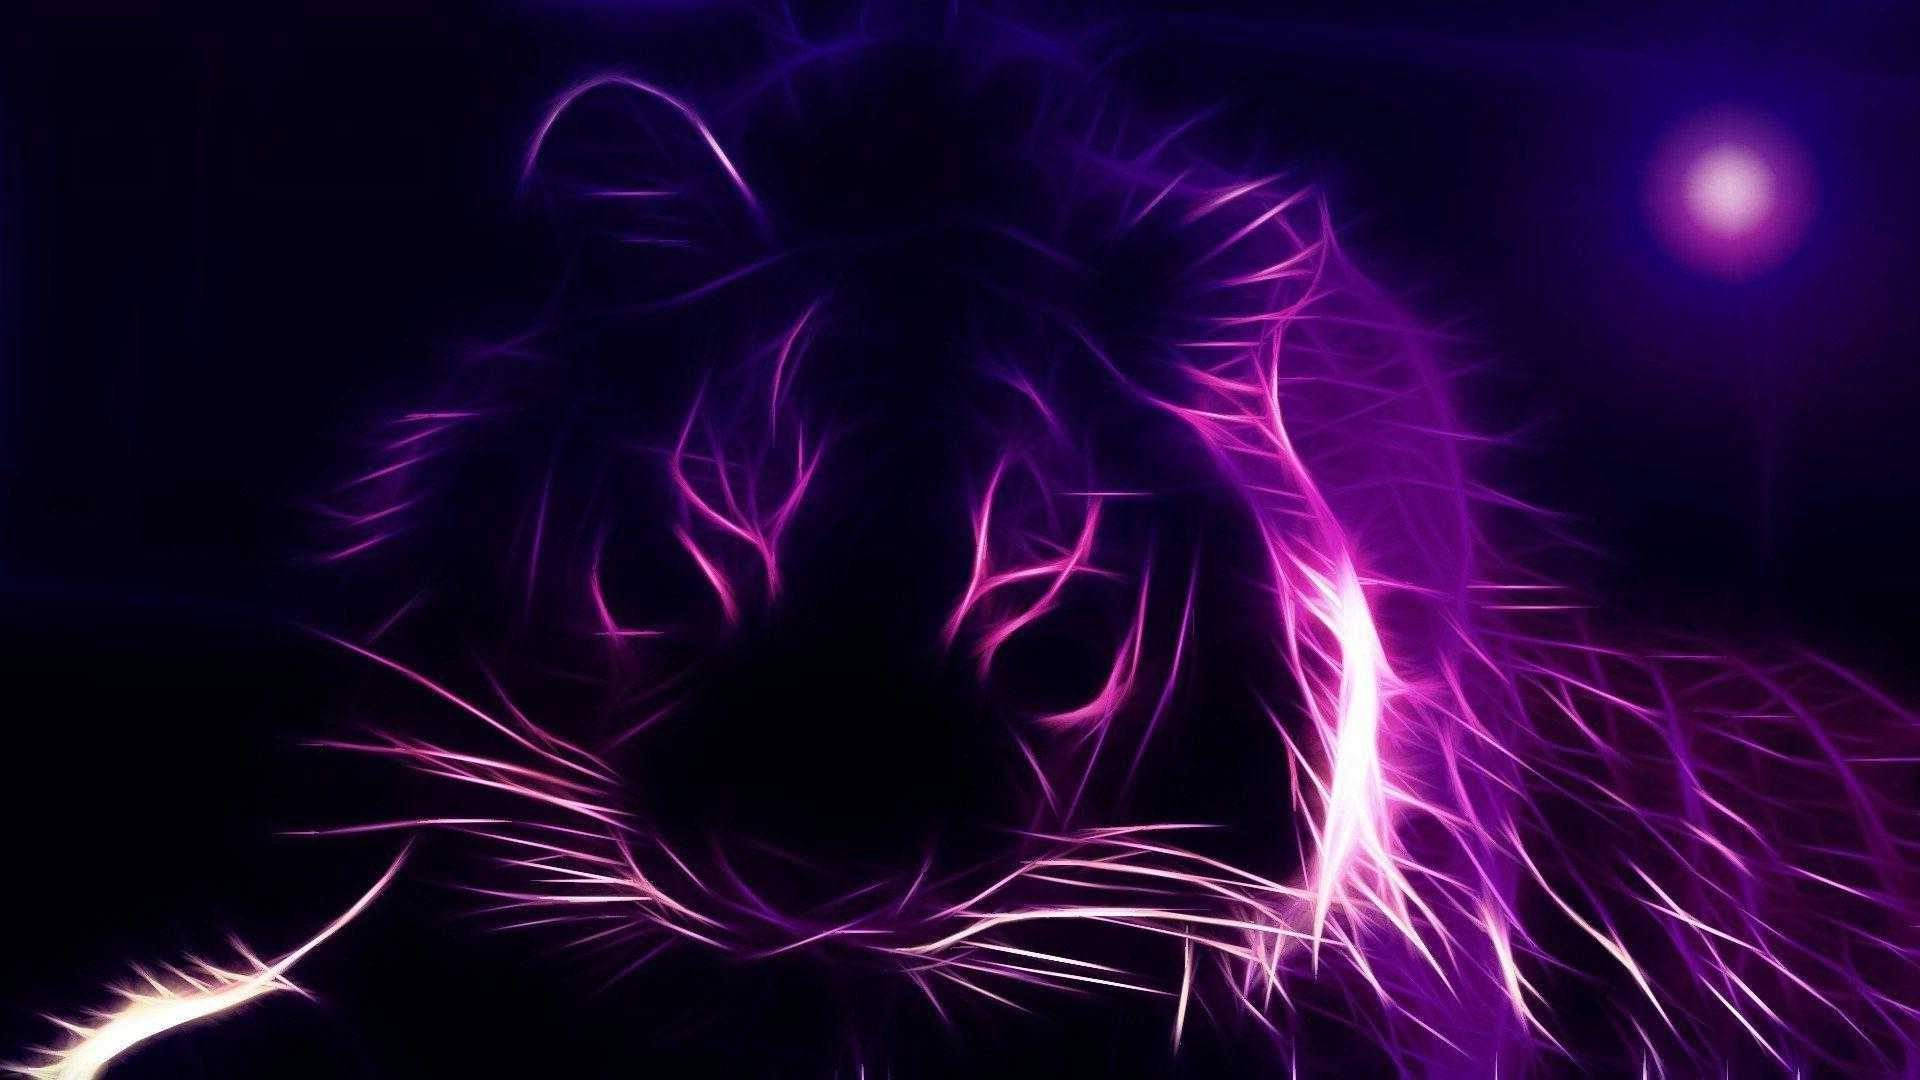 A majestic purple tiger against a digital art background Wallpaper